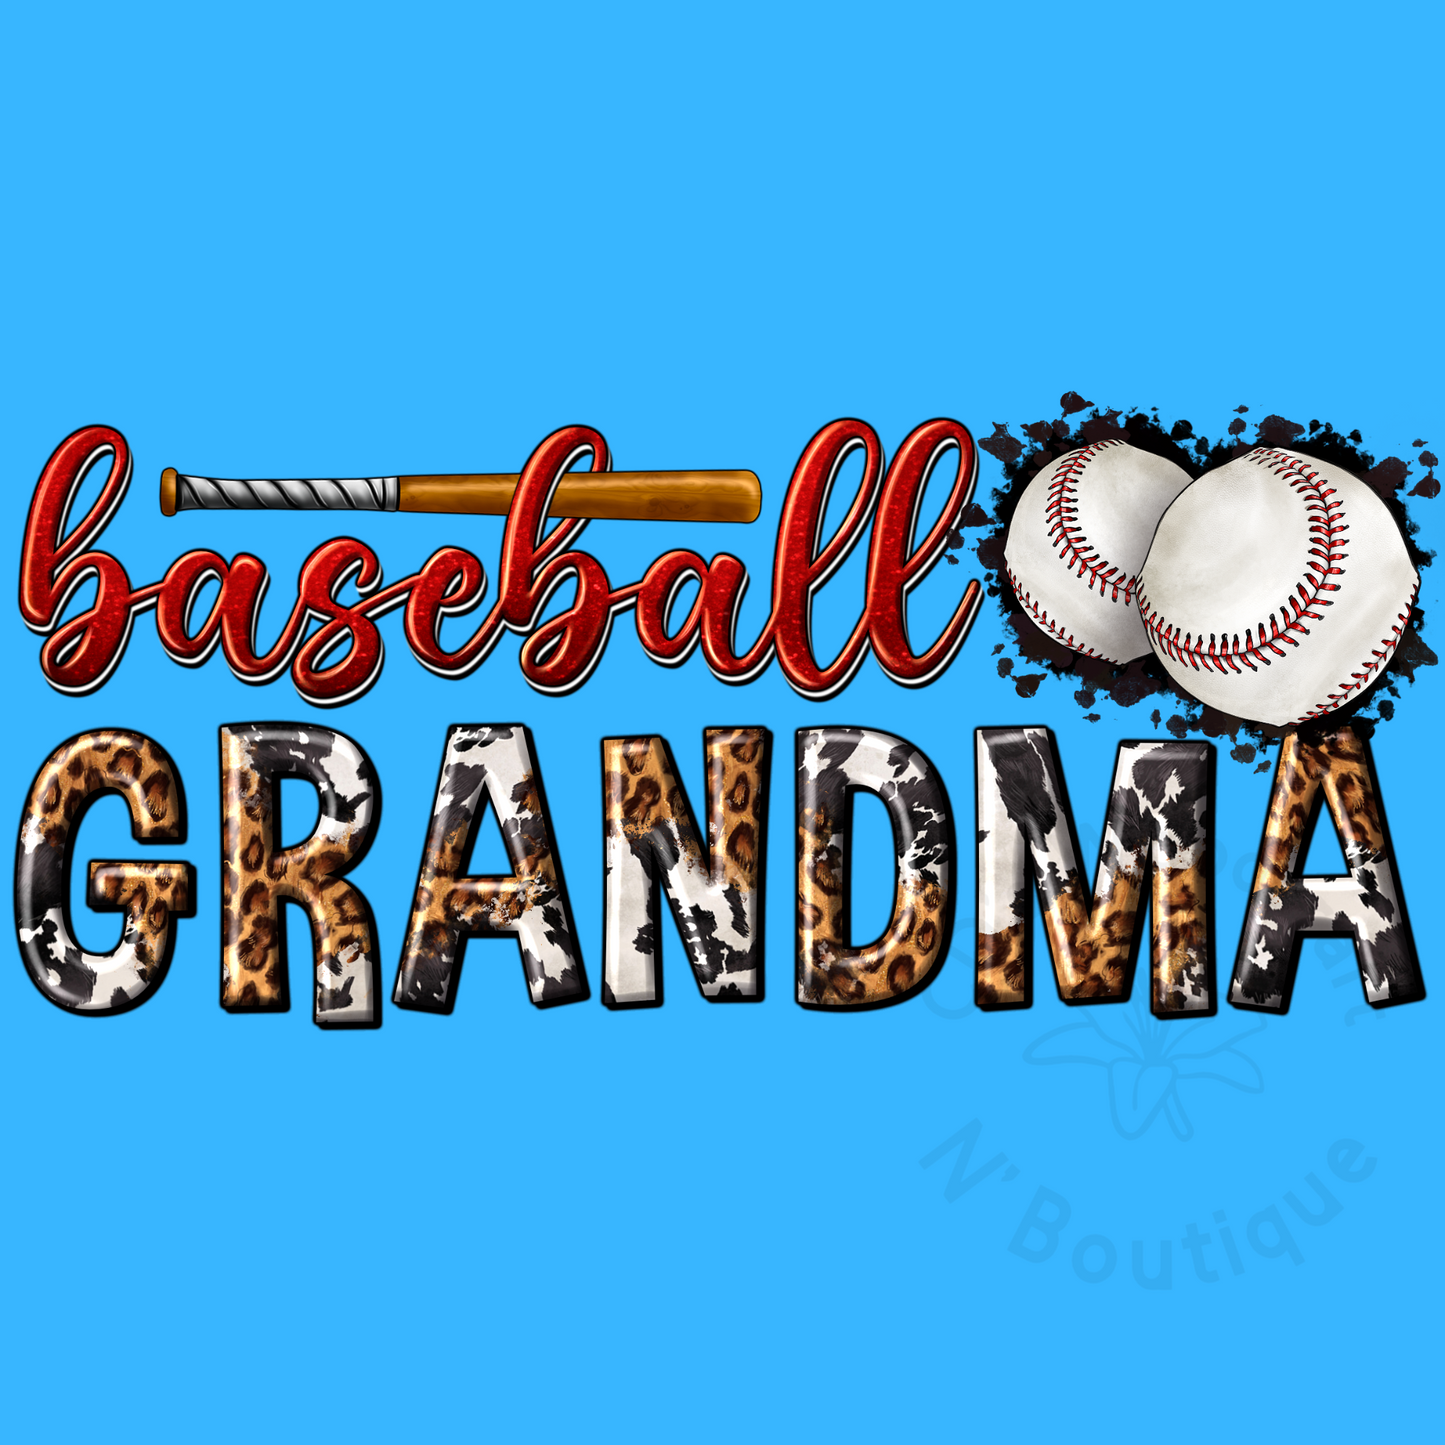 Baseball Grandma DTF transfer